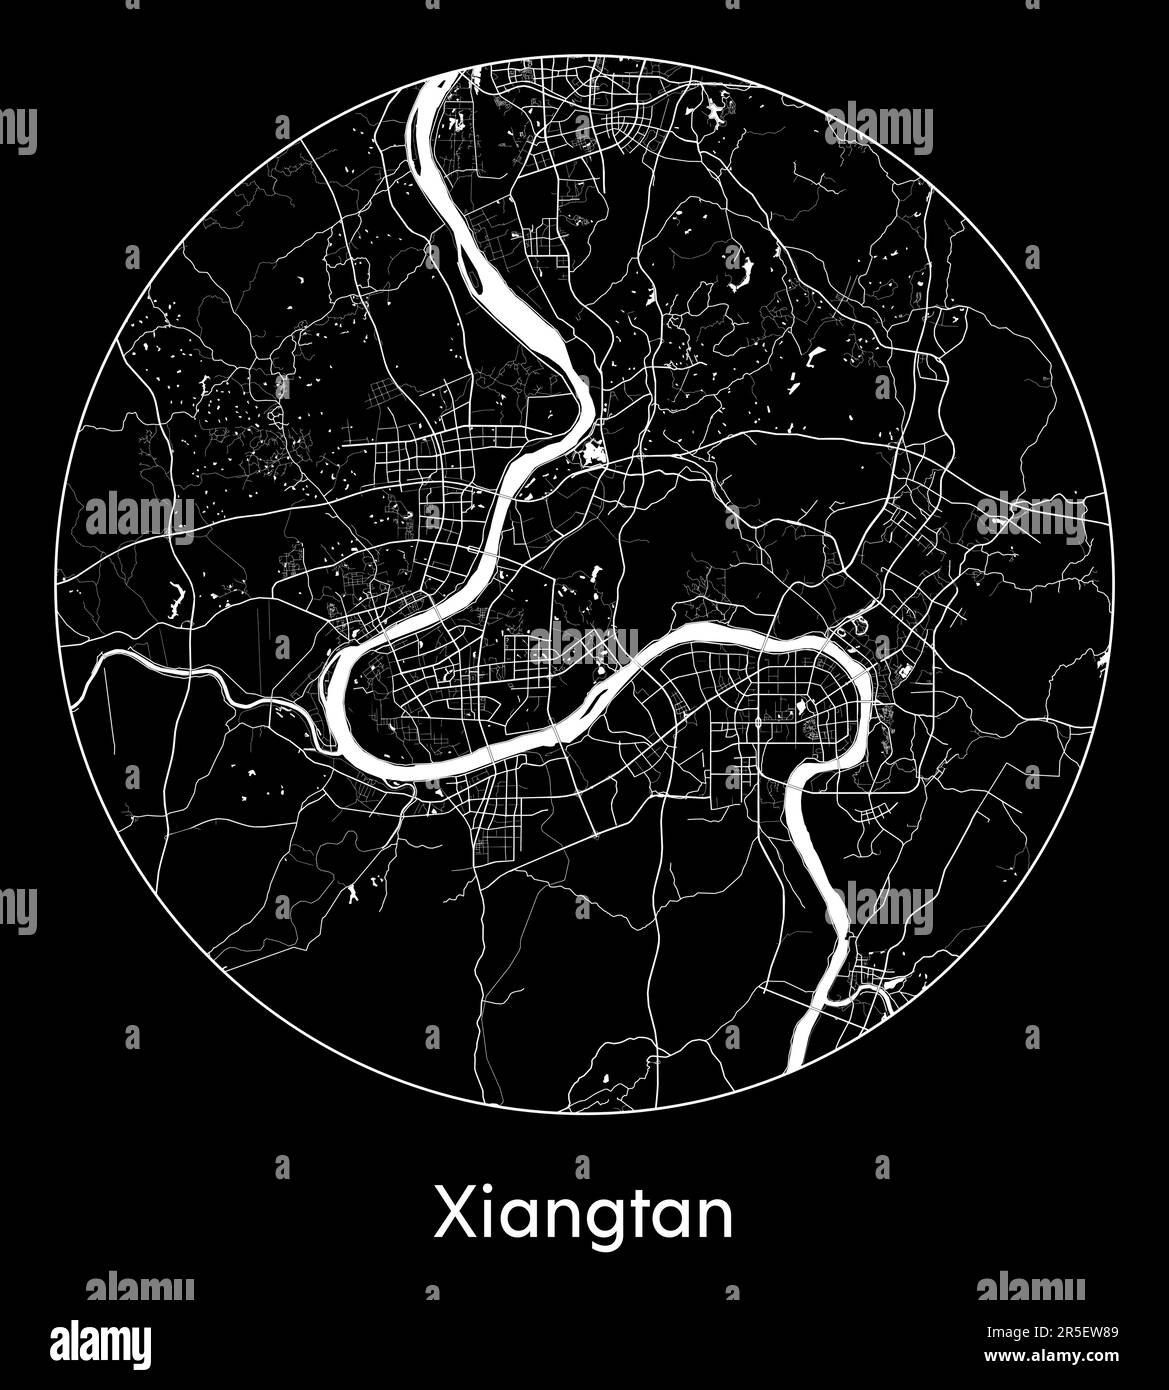 City Map Xiangtan China Asia vector illustration Stock Vector